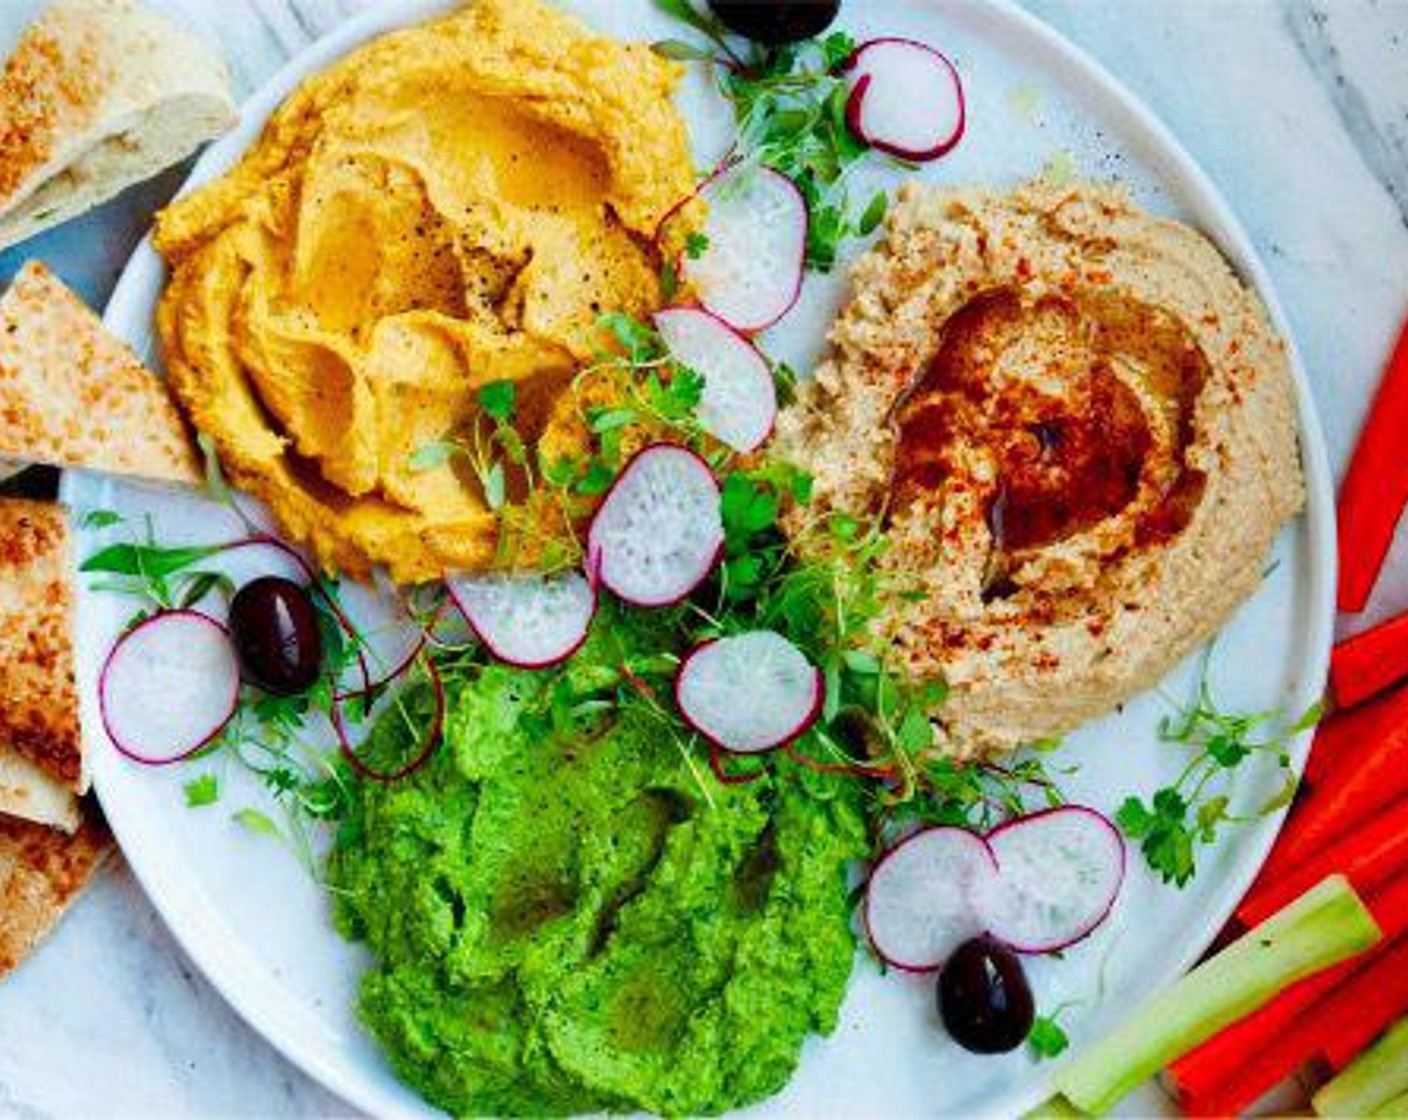 Hummus 3 Ways: Traditional, Roasted Pumpkin, and Kale